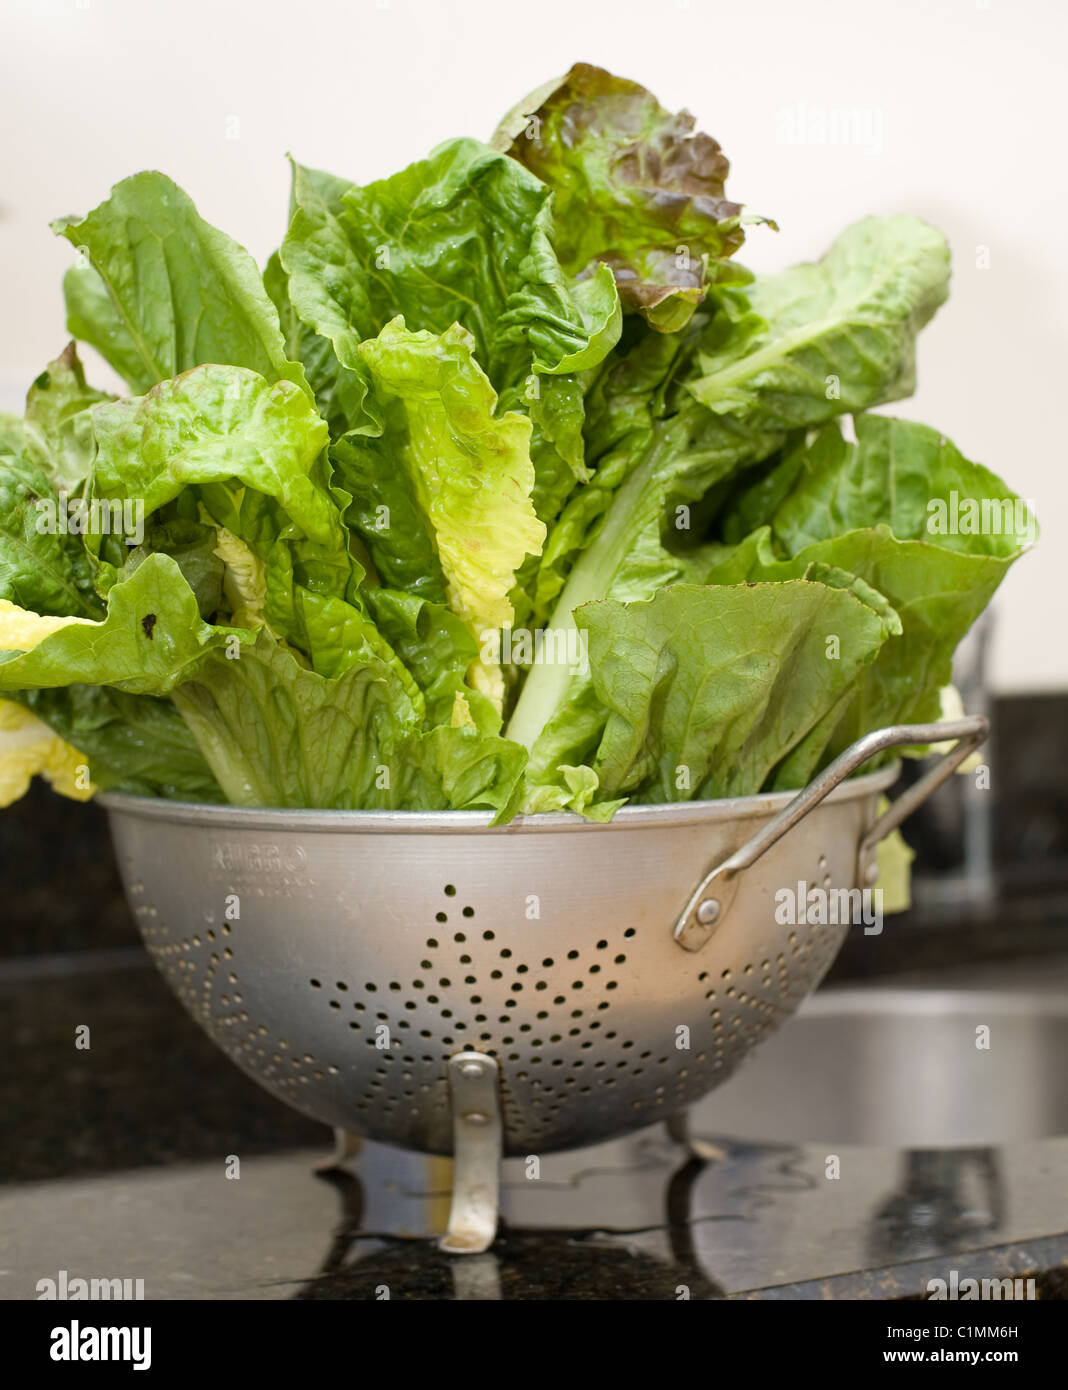 Fresca insalata lavata Foto Stock